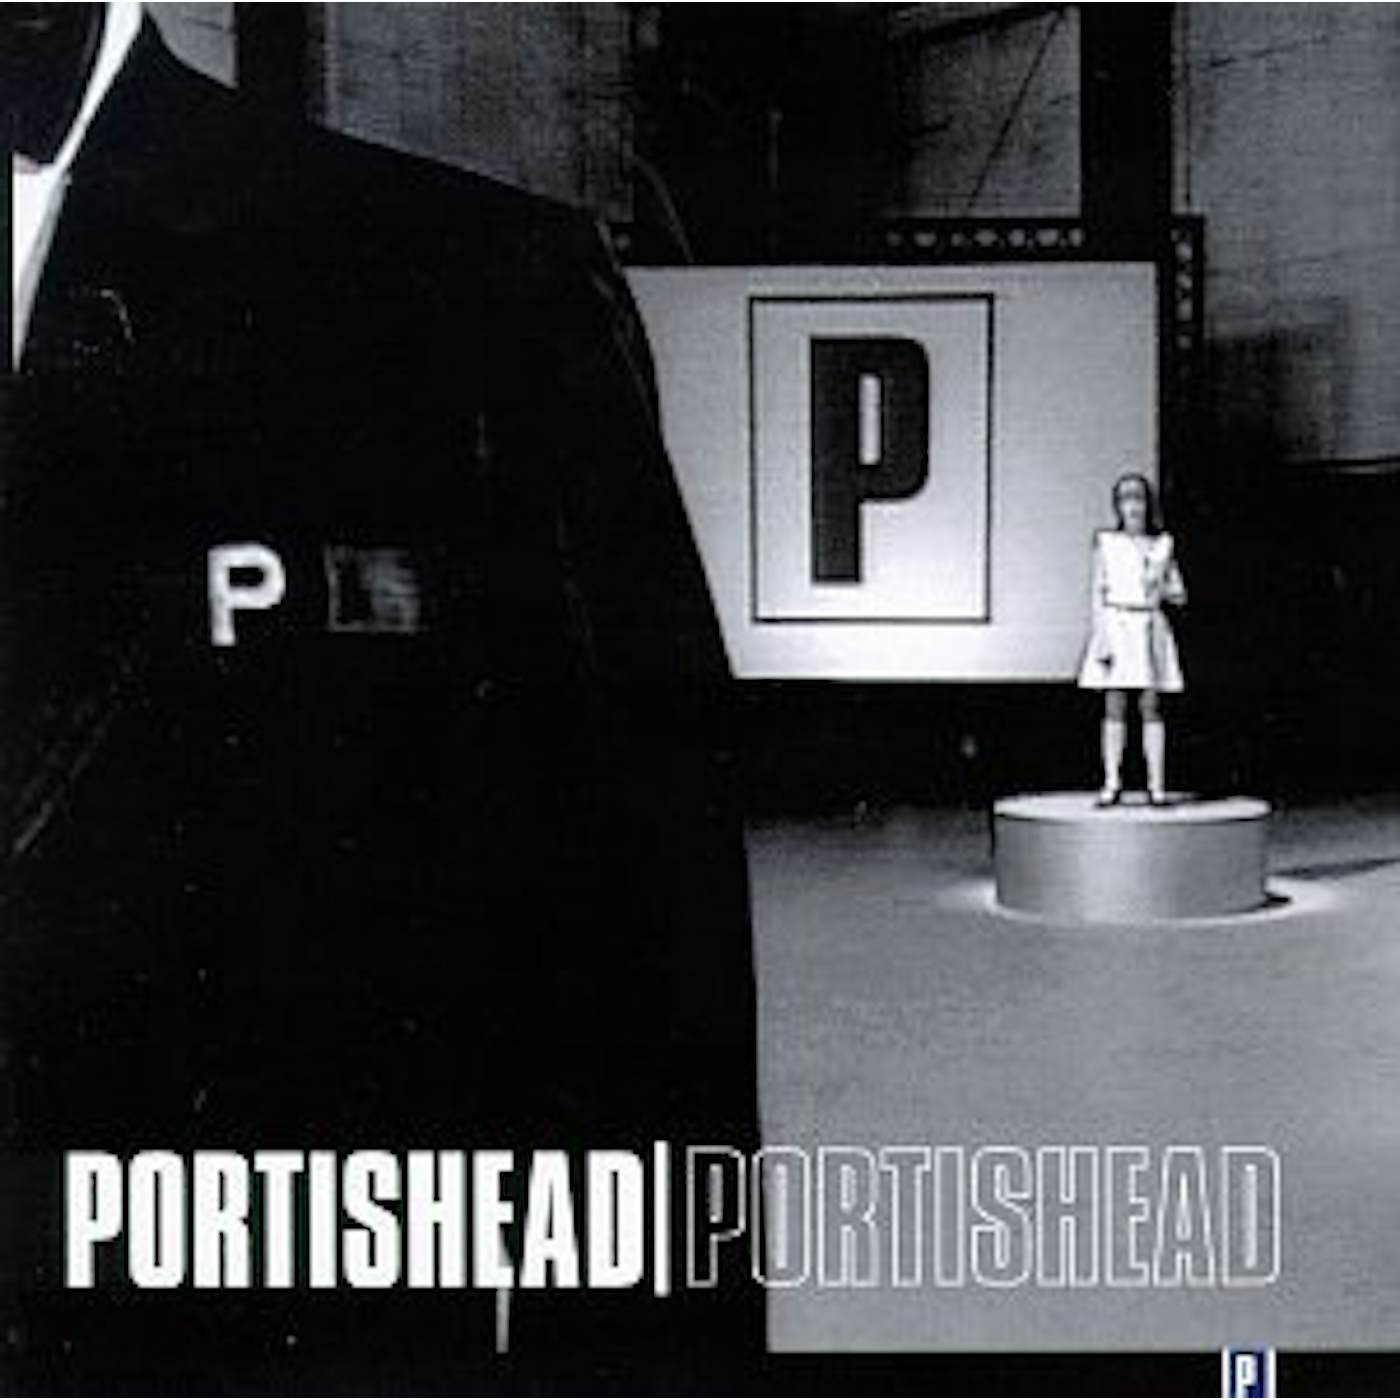 PORTISHEAD CD